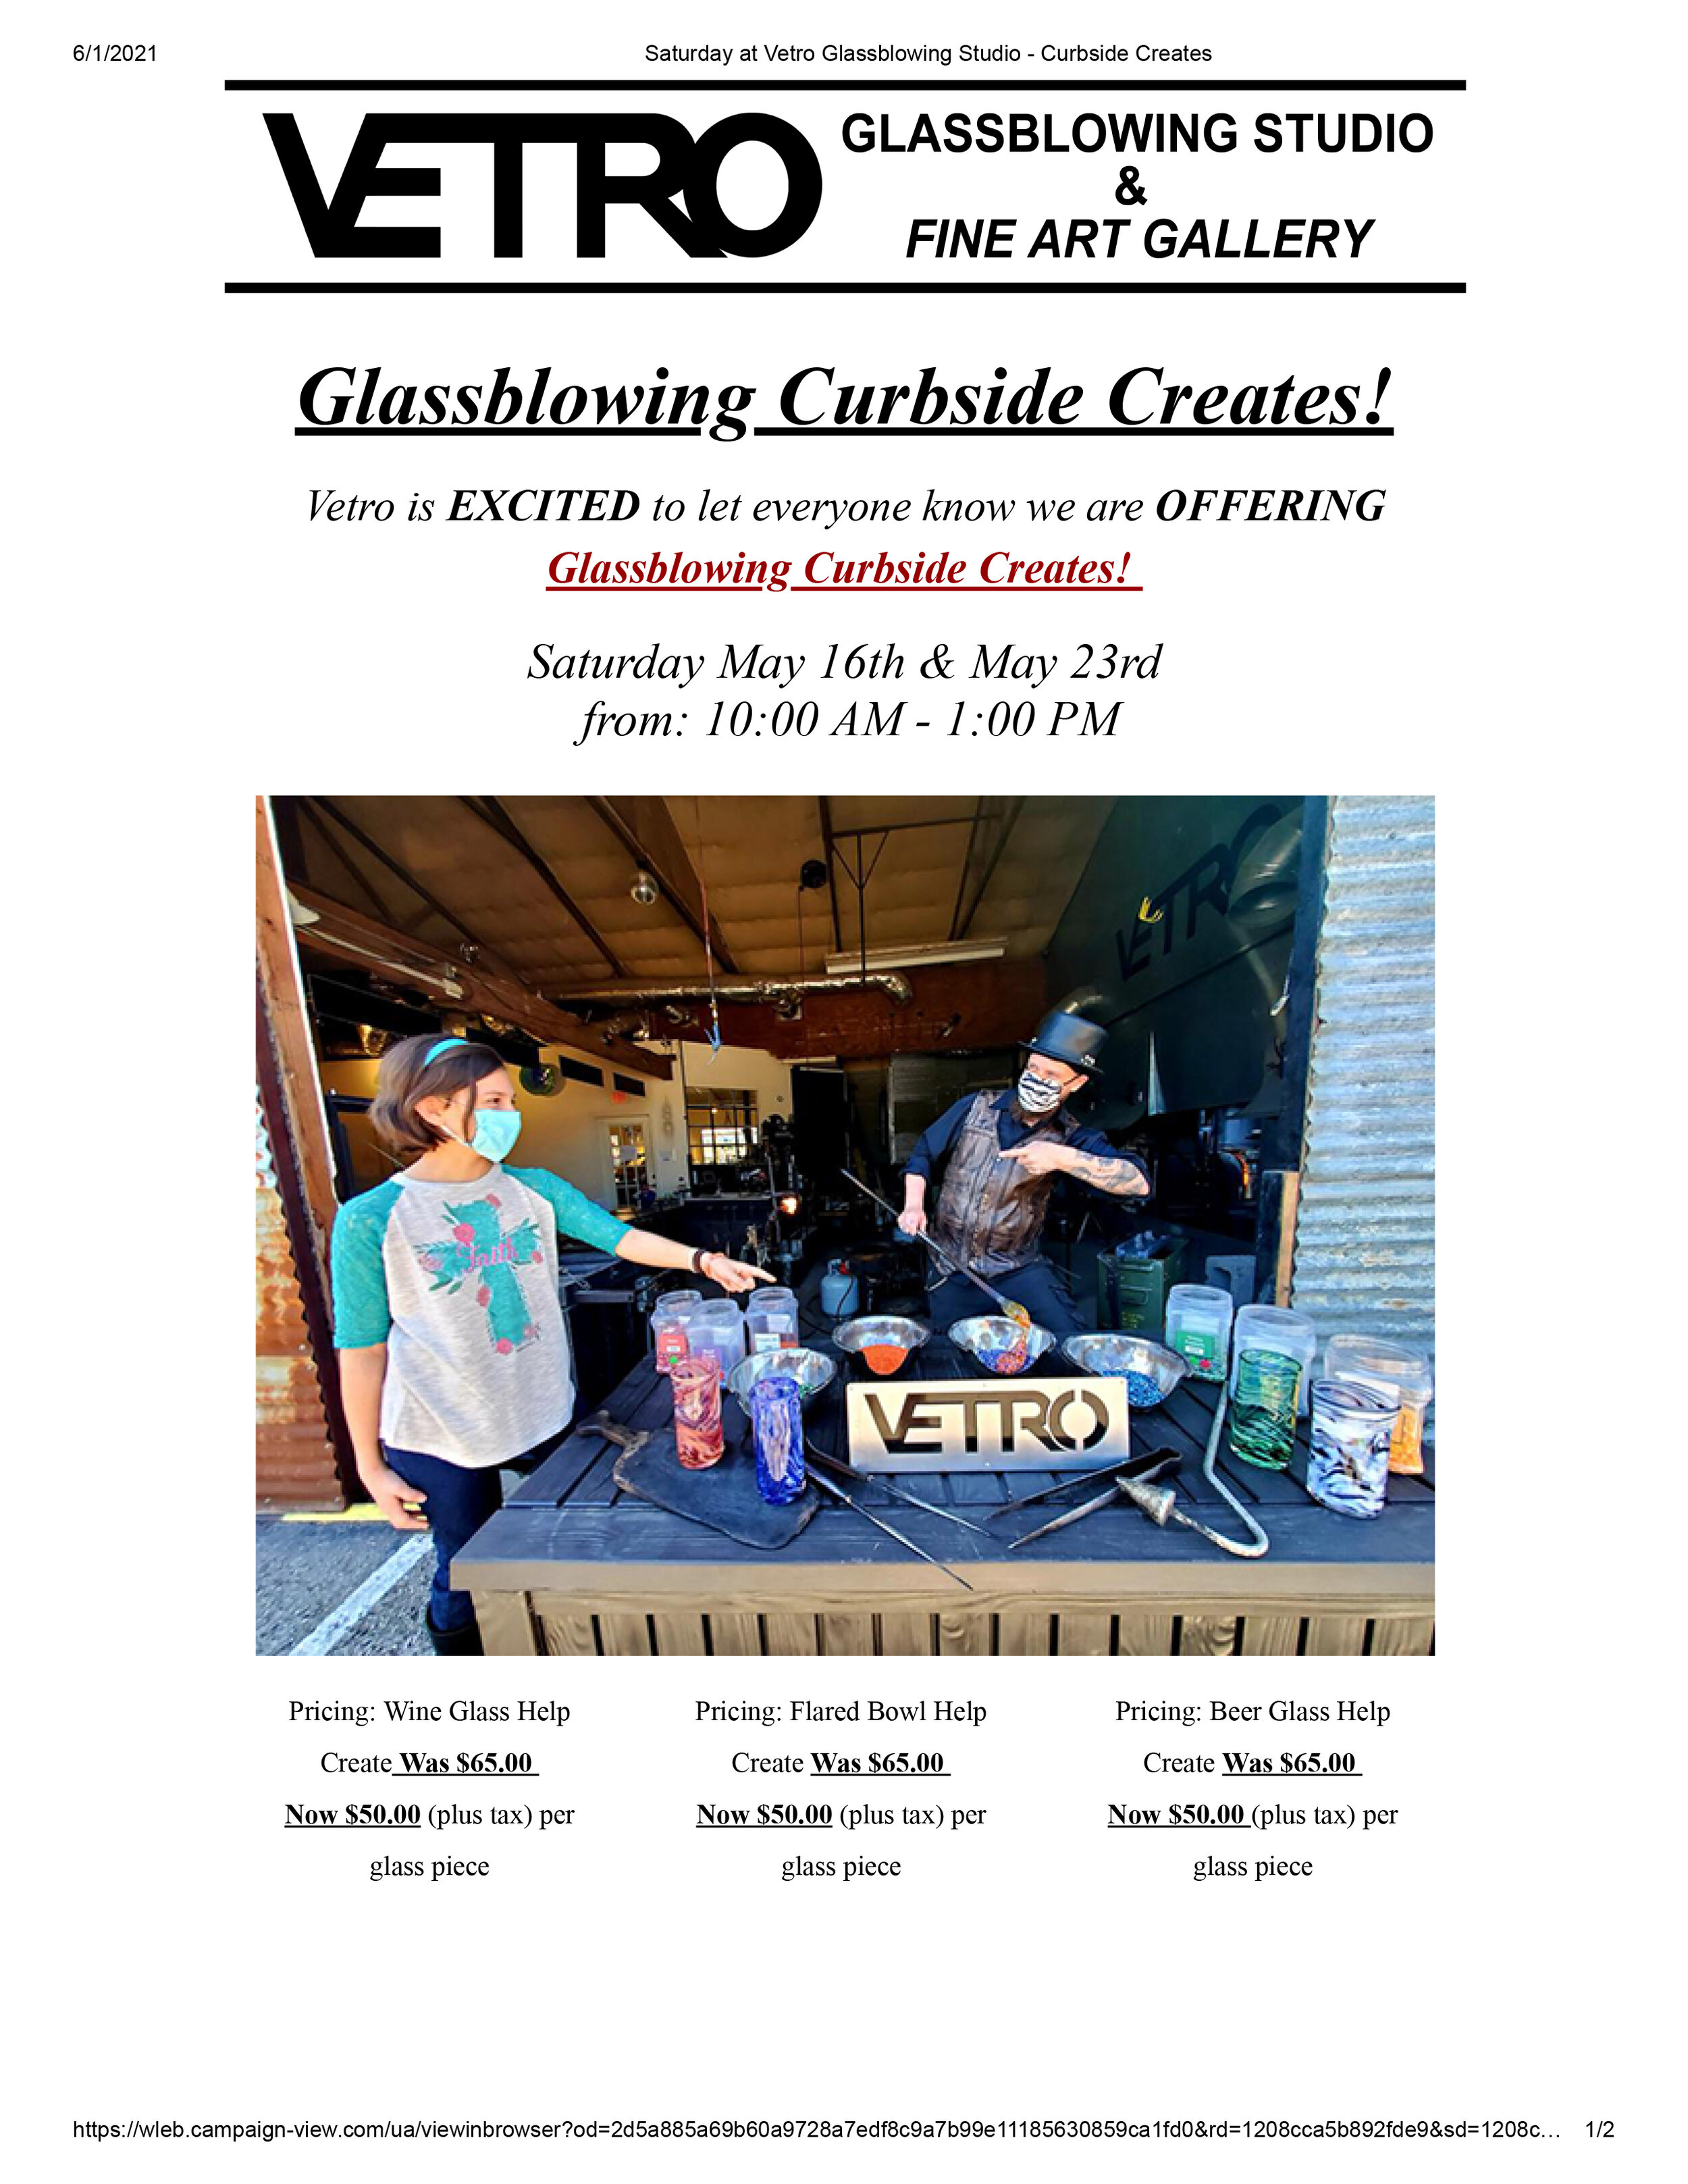 Email Campaigns -Vetro Glassblowing Studio - Glassblowing Curbside Creates-1.jpg